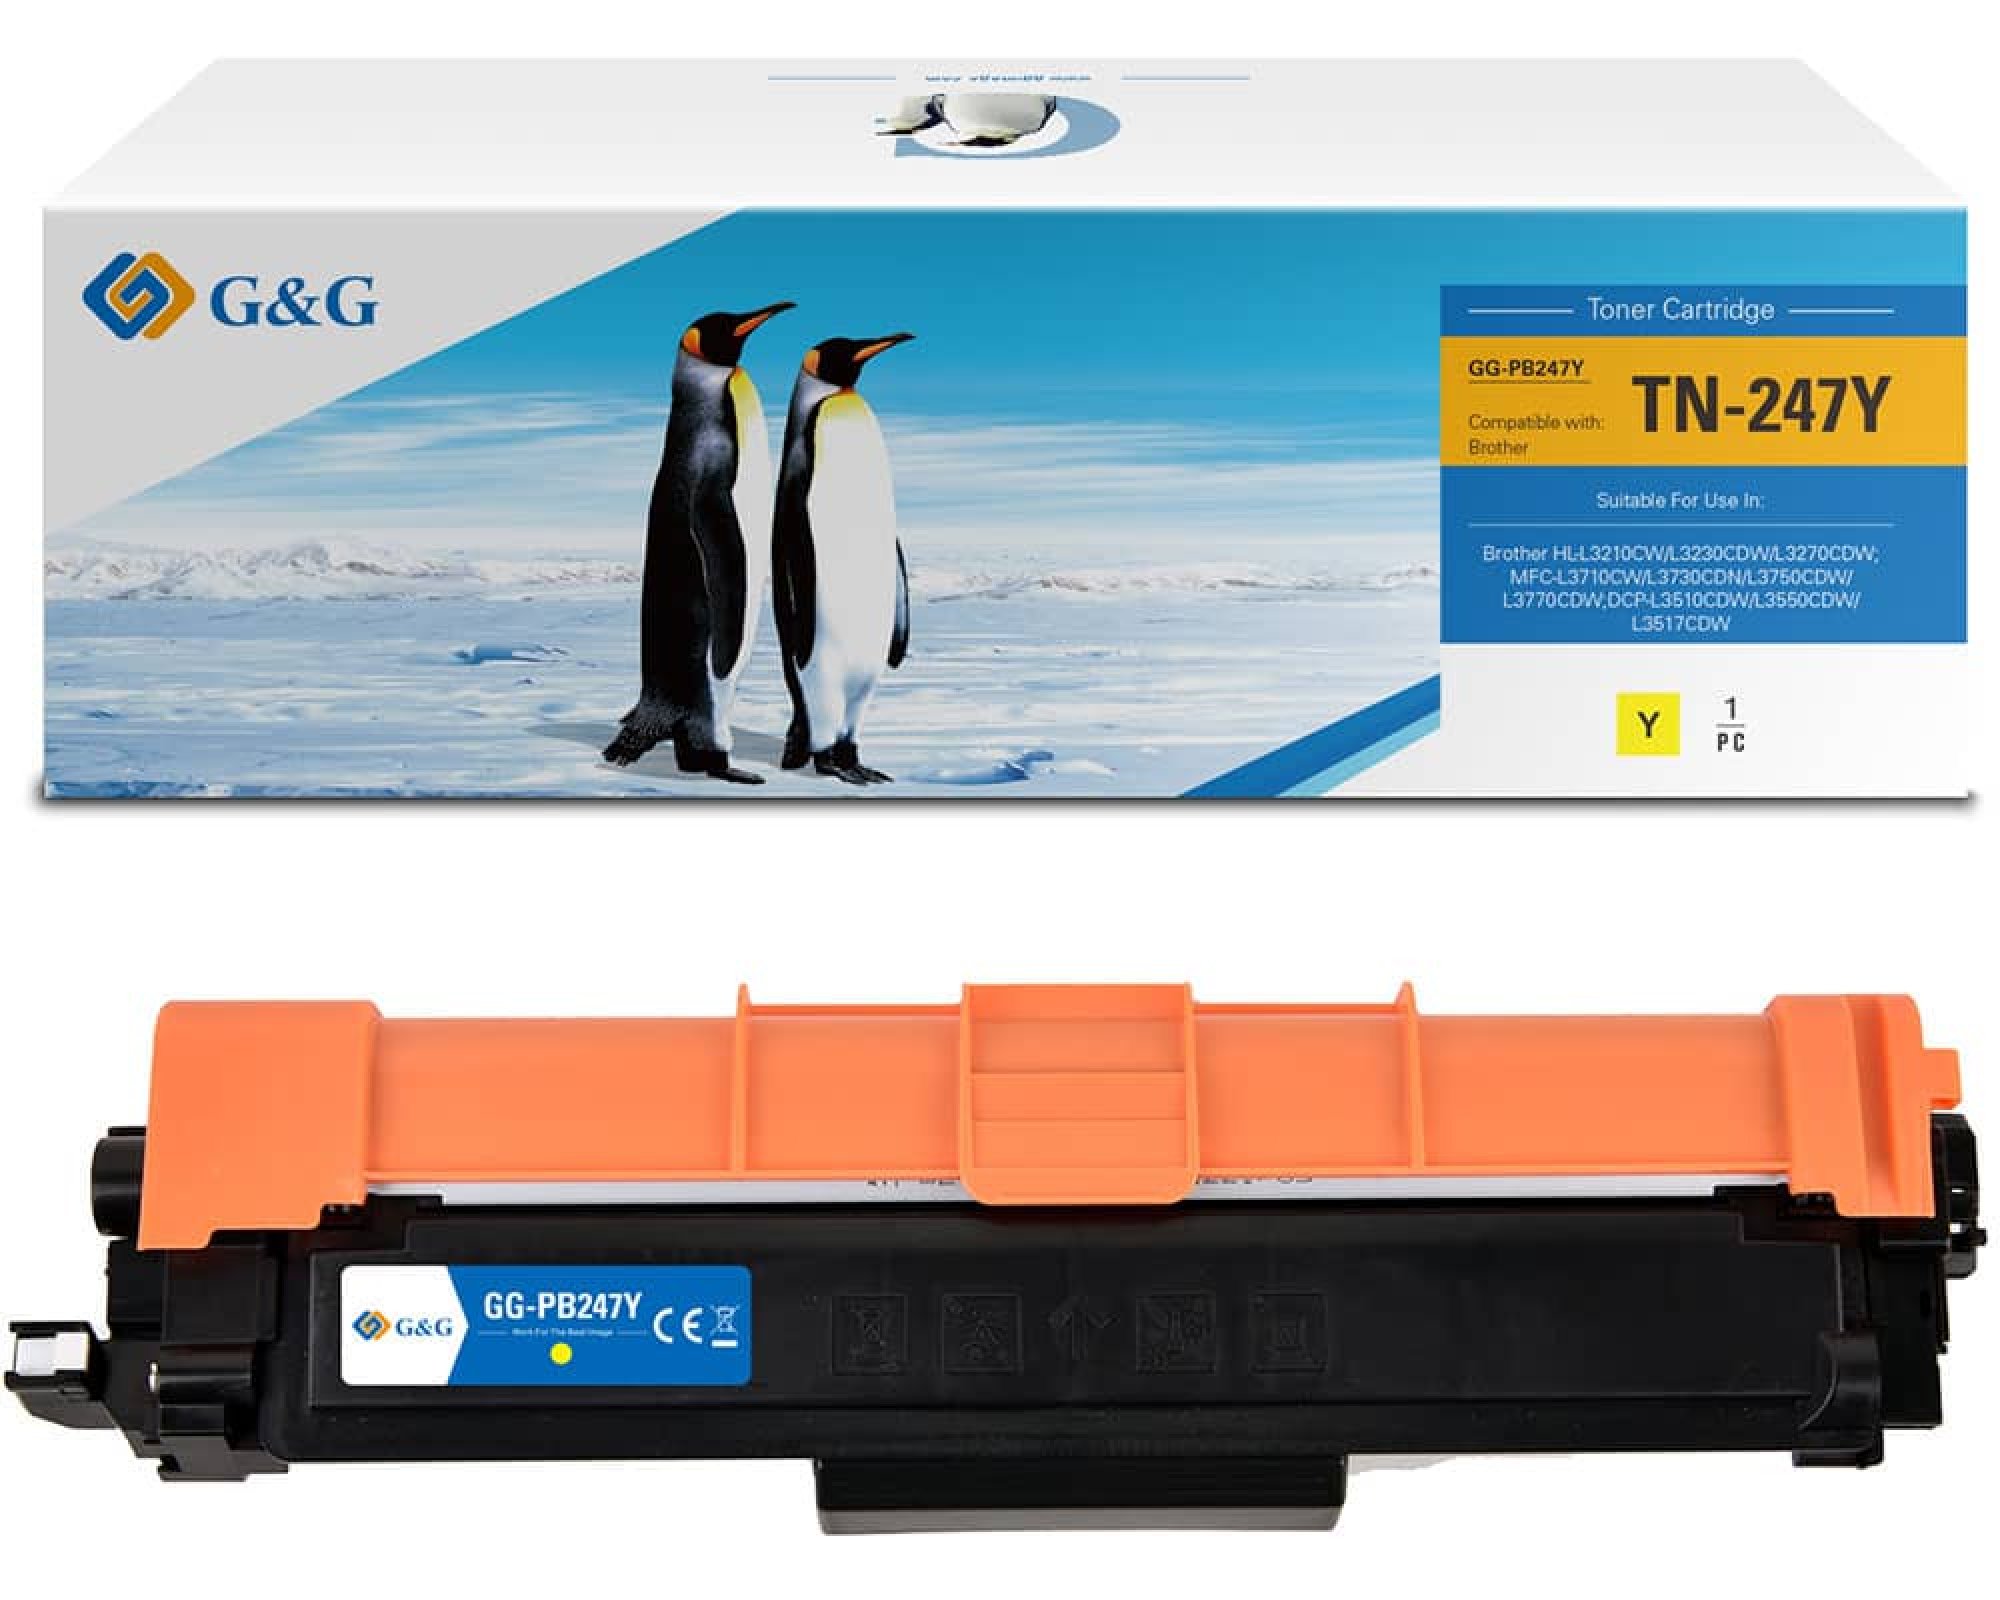 Kompatibel mit Brother TN-247Y Toner Gelb [modell] - Marke: G&G